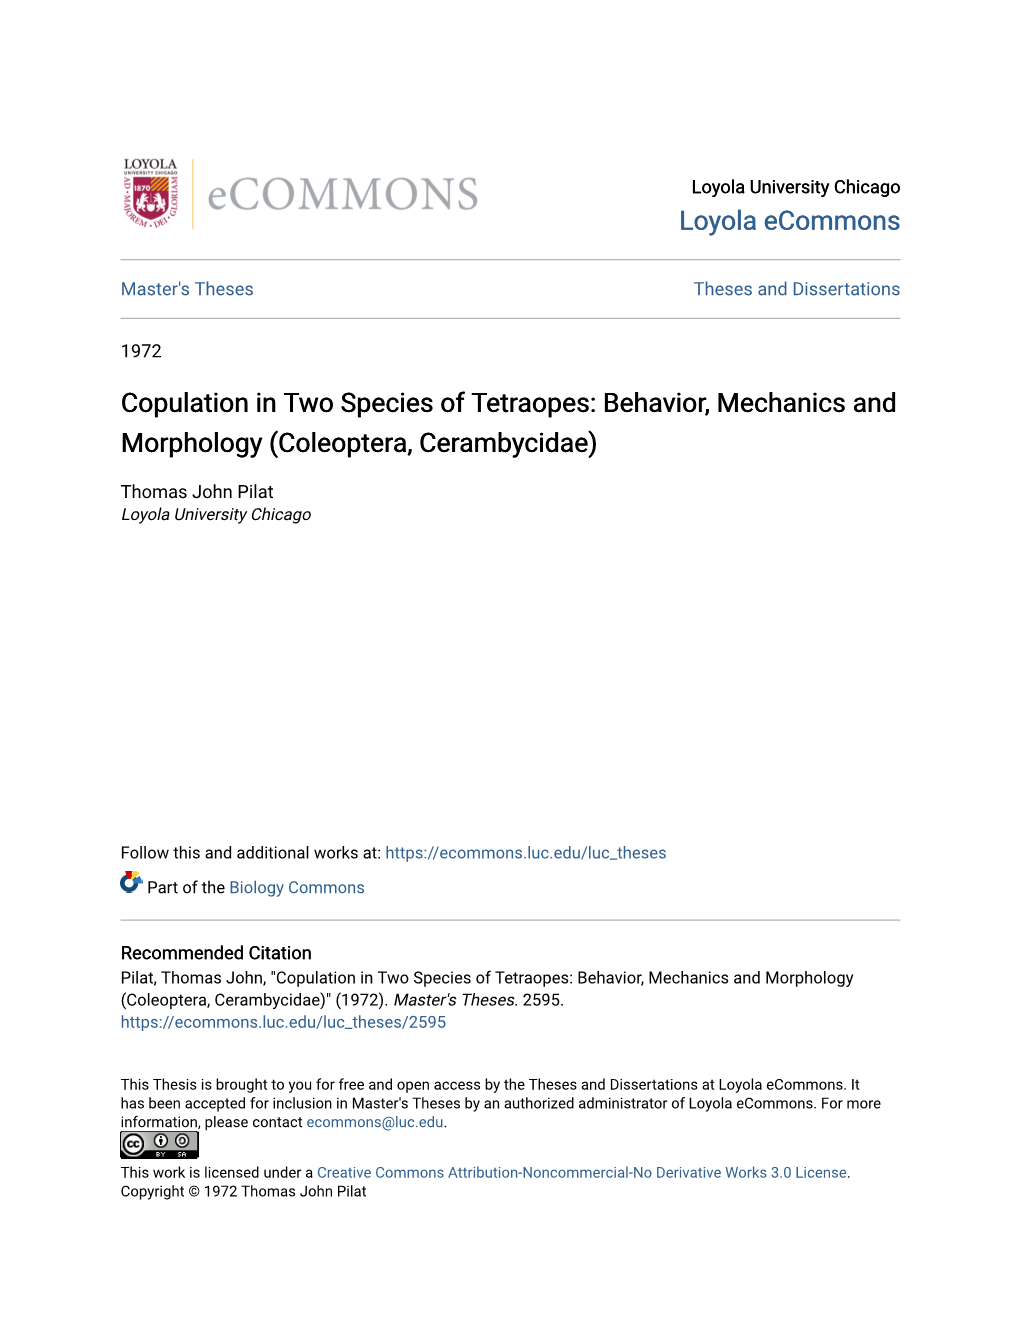 Copulation in Two Species of Tetraopes: Behavior, Mechanics and Morphology (Coleoptera, Cerambycidae)